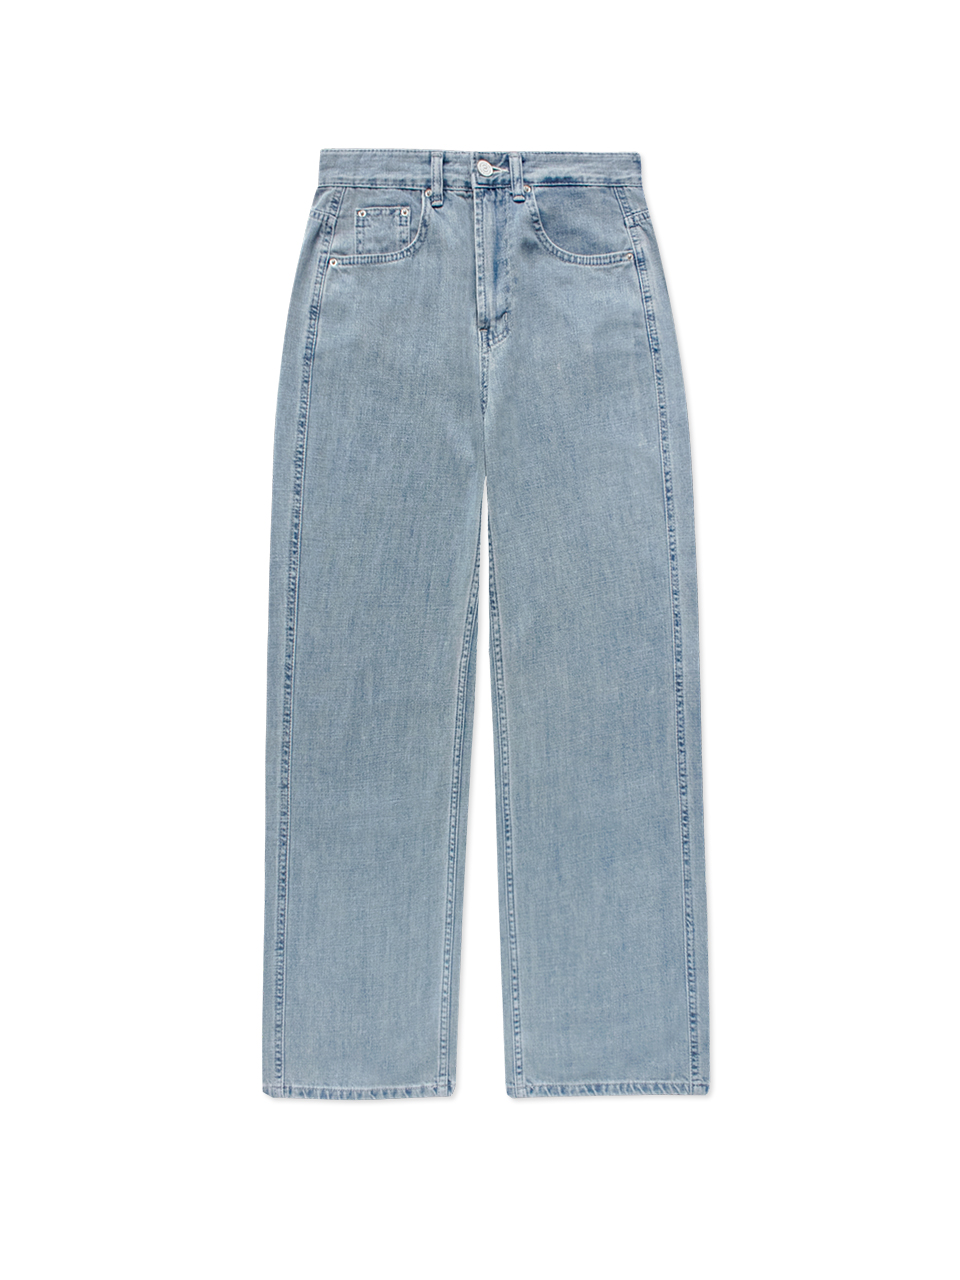 [WIDE] Blush Jeans